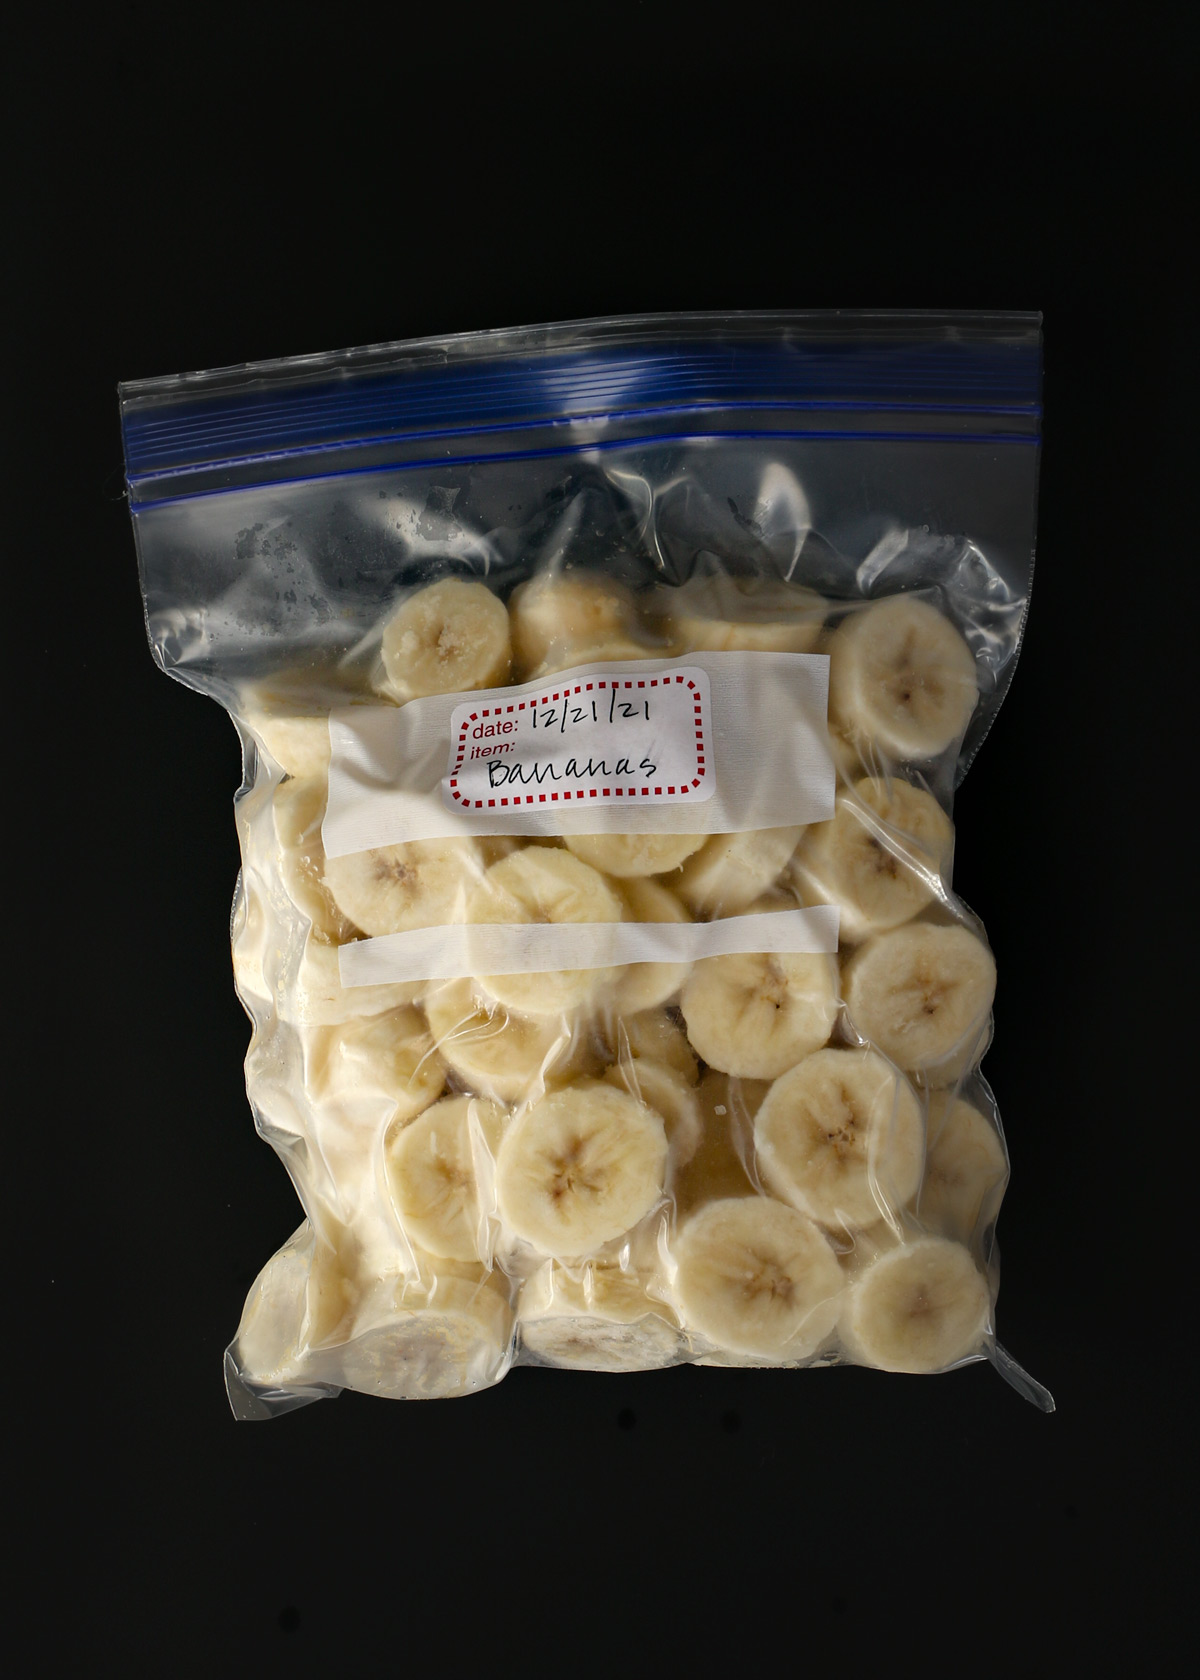 banana slices sealed inside ziptop bag.